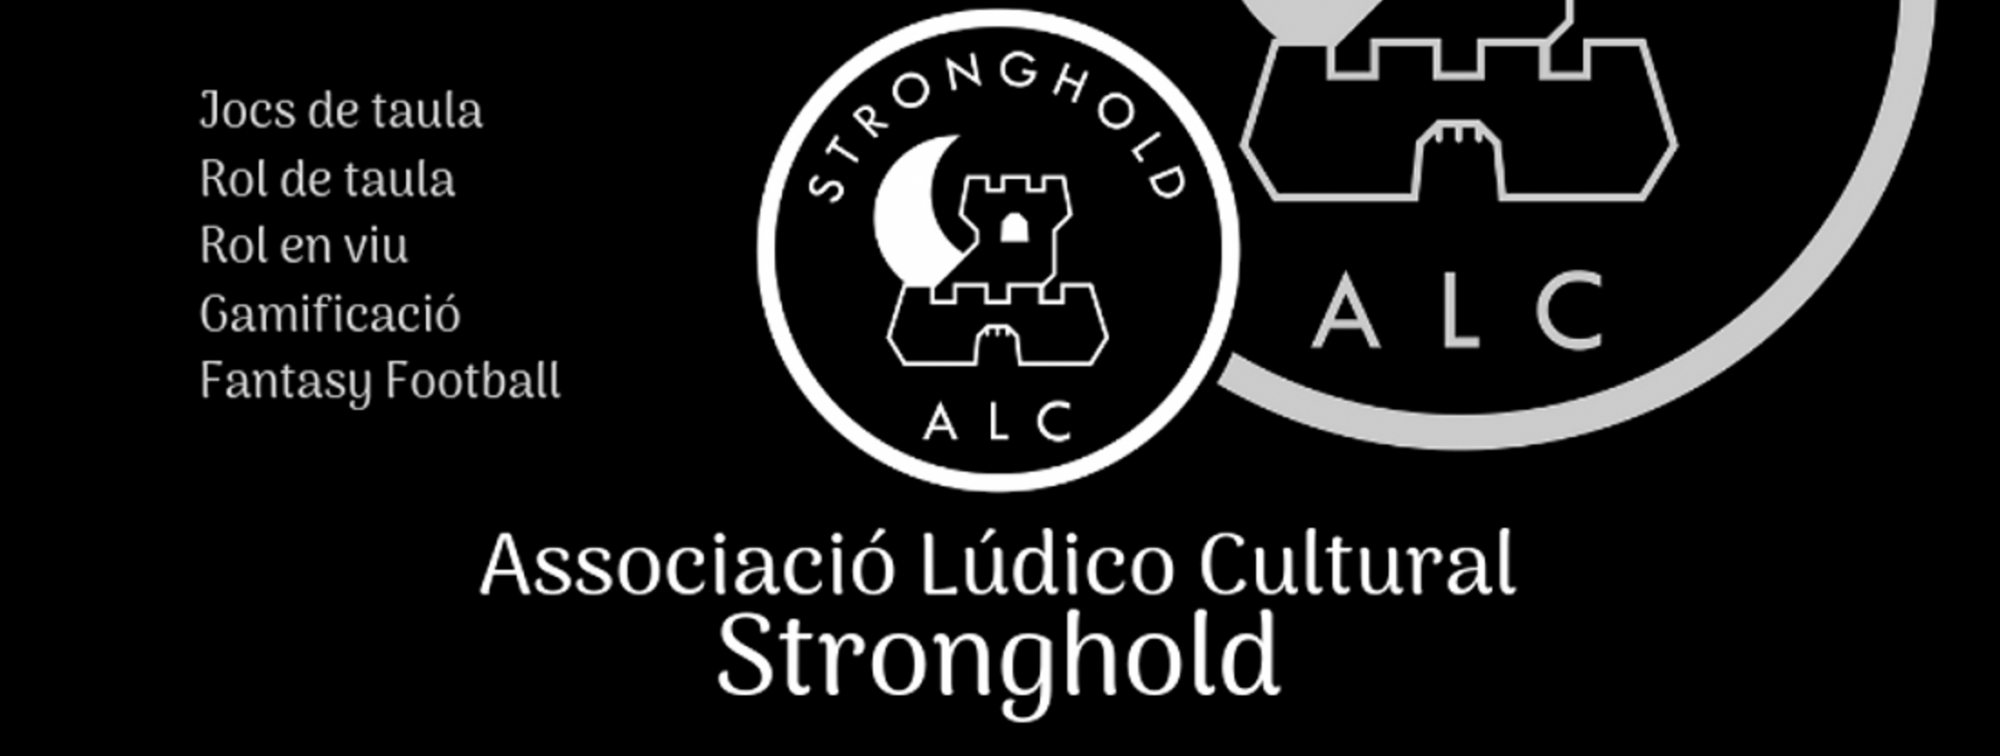 Asociación Lúdico Cultural Stronghold. Jocs de taula, rol de taula, rol en viu, gamificació.